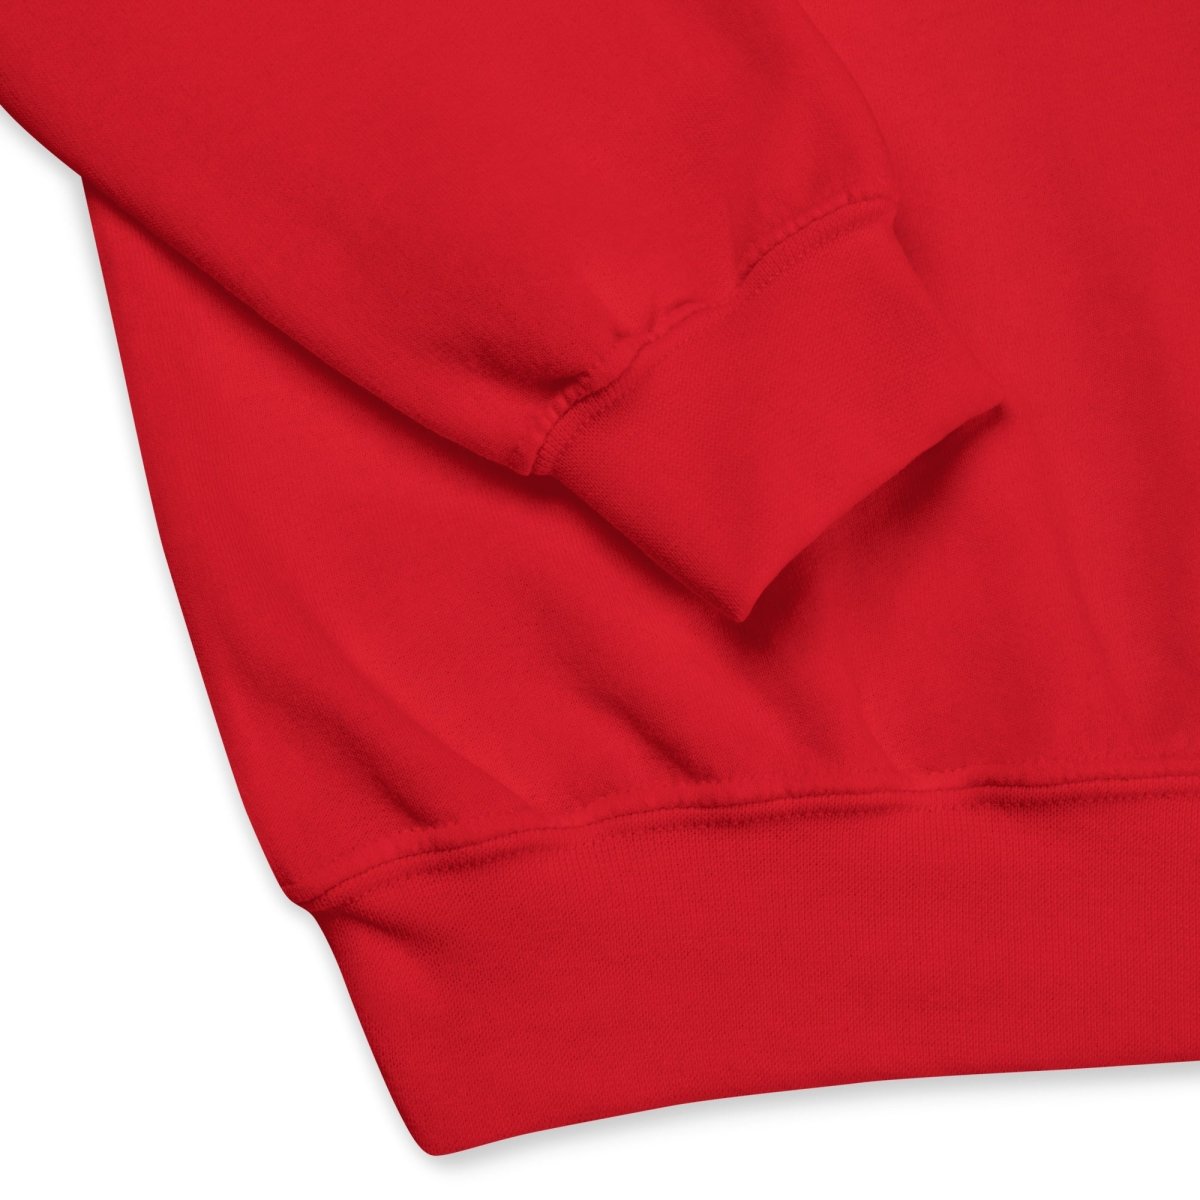 Red Plaid LOVE Paw Sweatshirt - DoggyLoveandMore